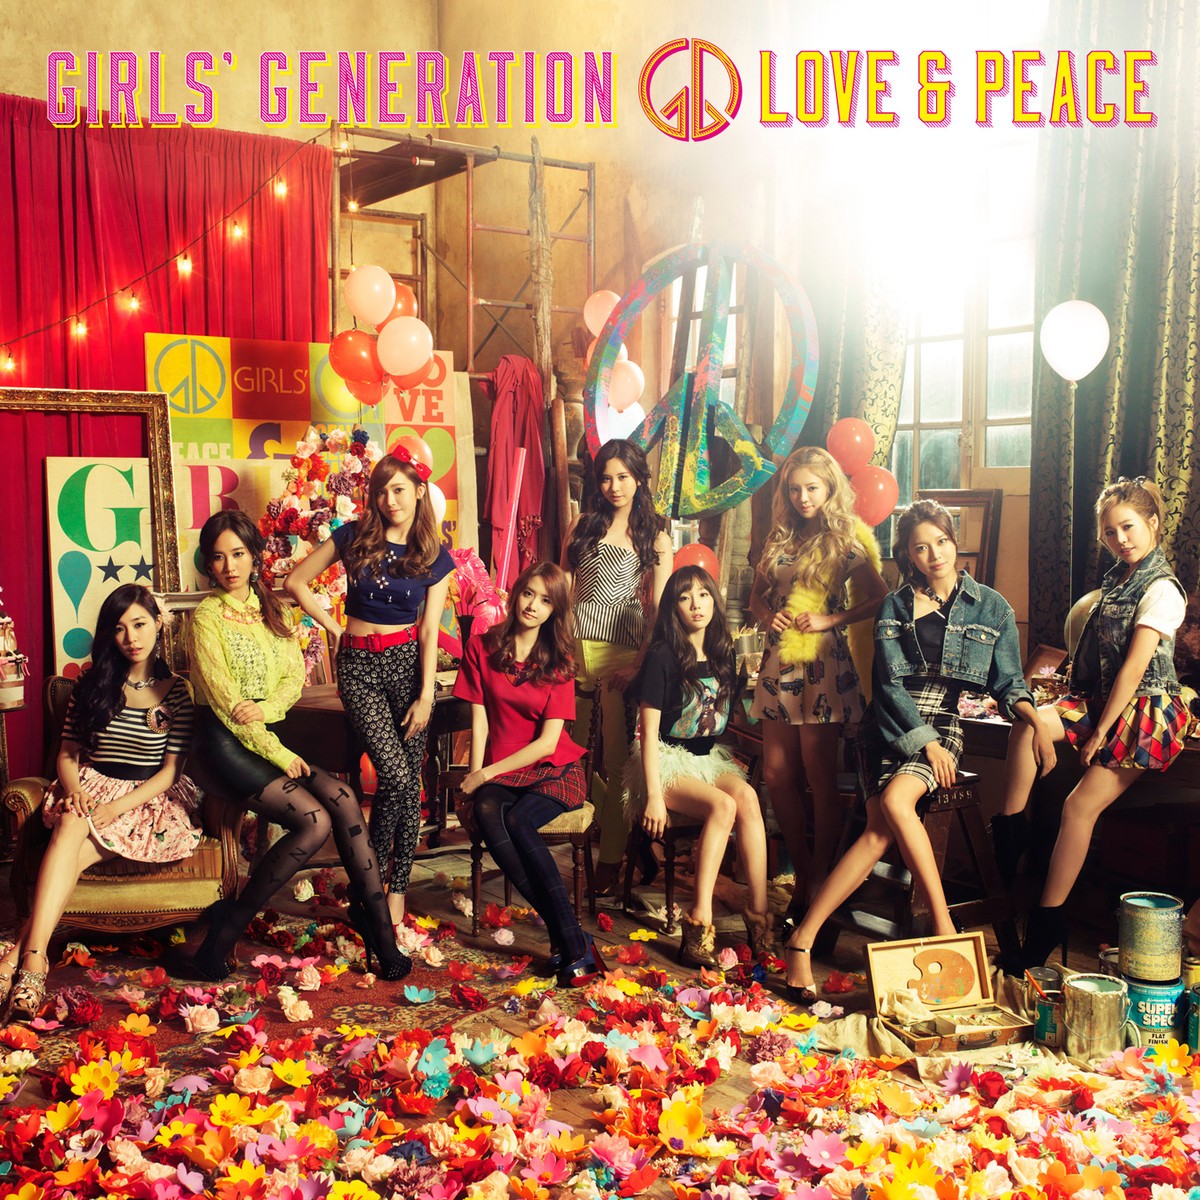 20151121.80 Girls' Generation (SNSD) - LOVE & PEACE cover.jpg